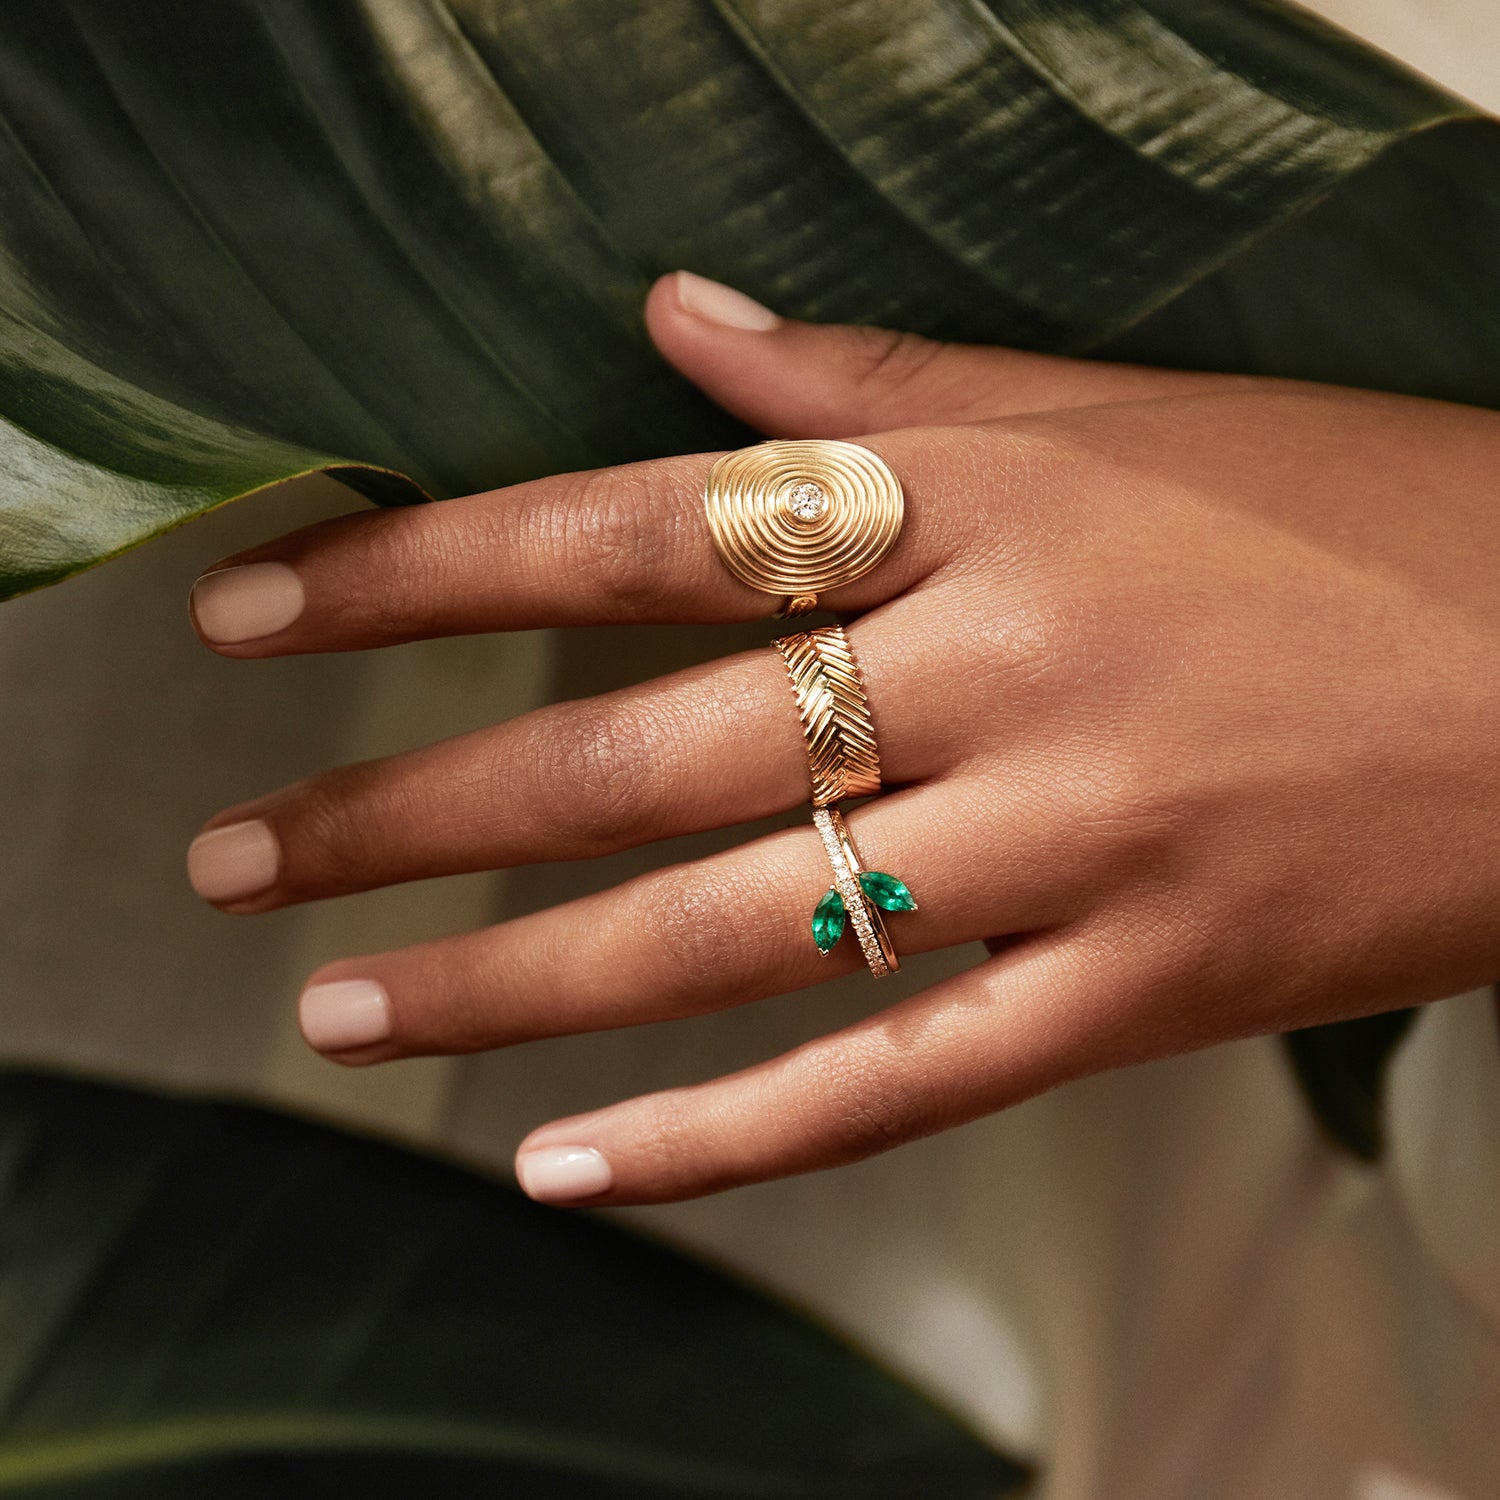 Defne Ring | Emerald